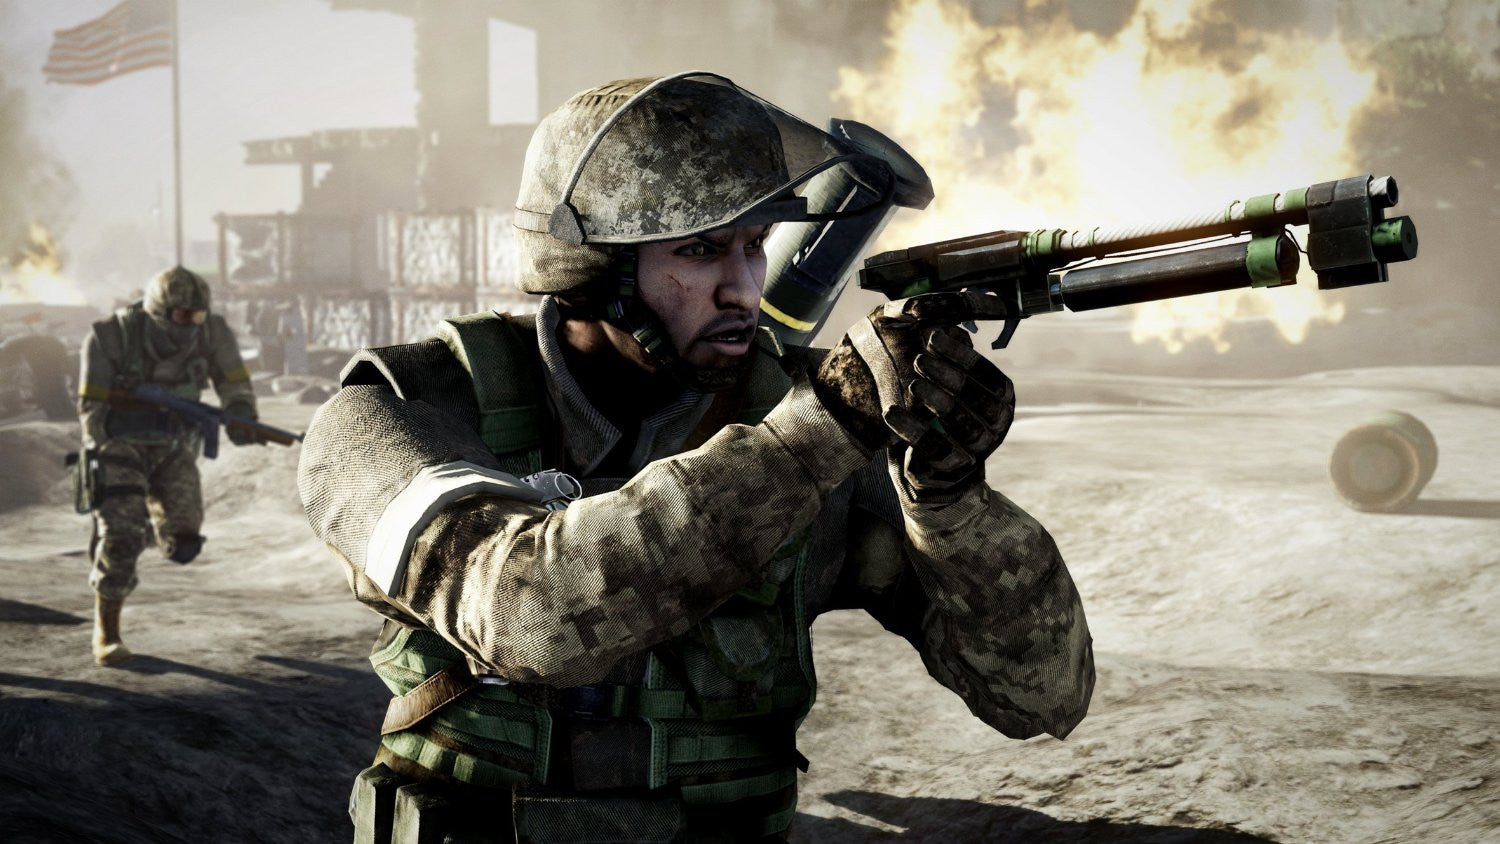 Battlefield Bad Company 2 Ultimate Edition - Playstation 3